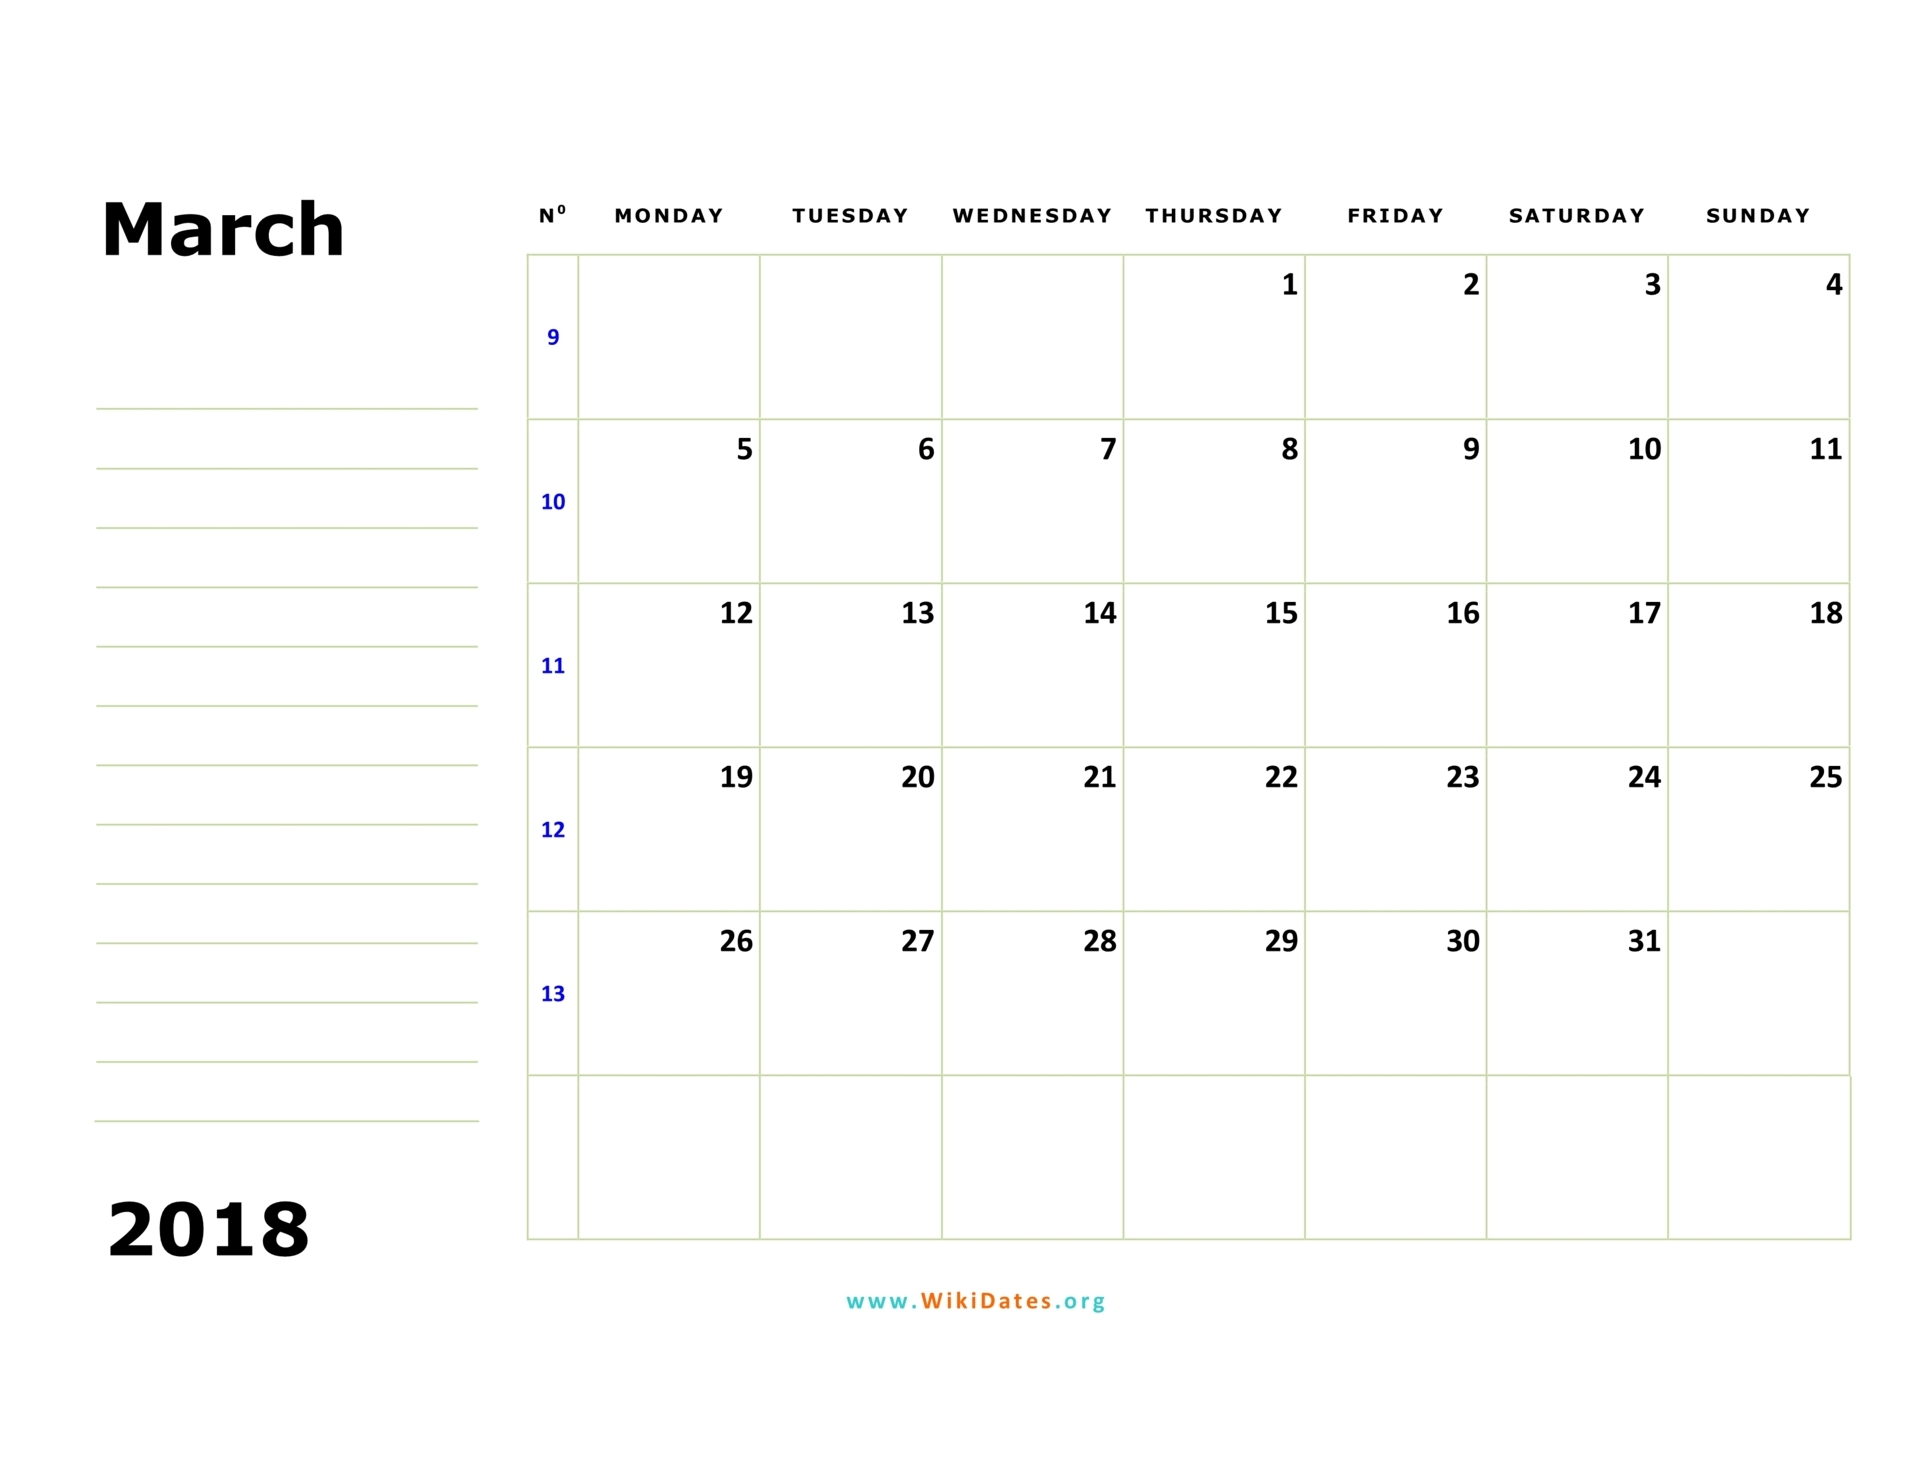 march-2018-calendar-wikidates